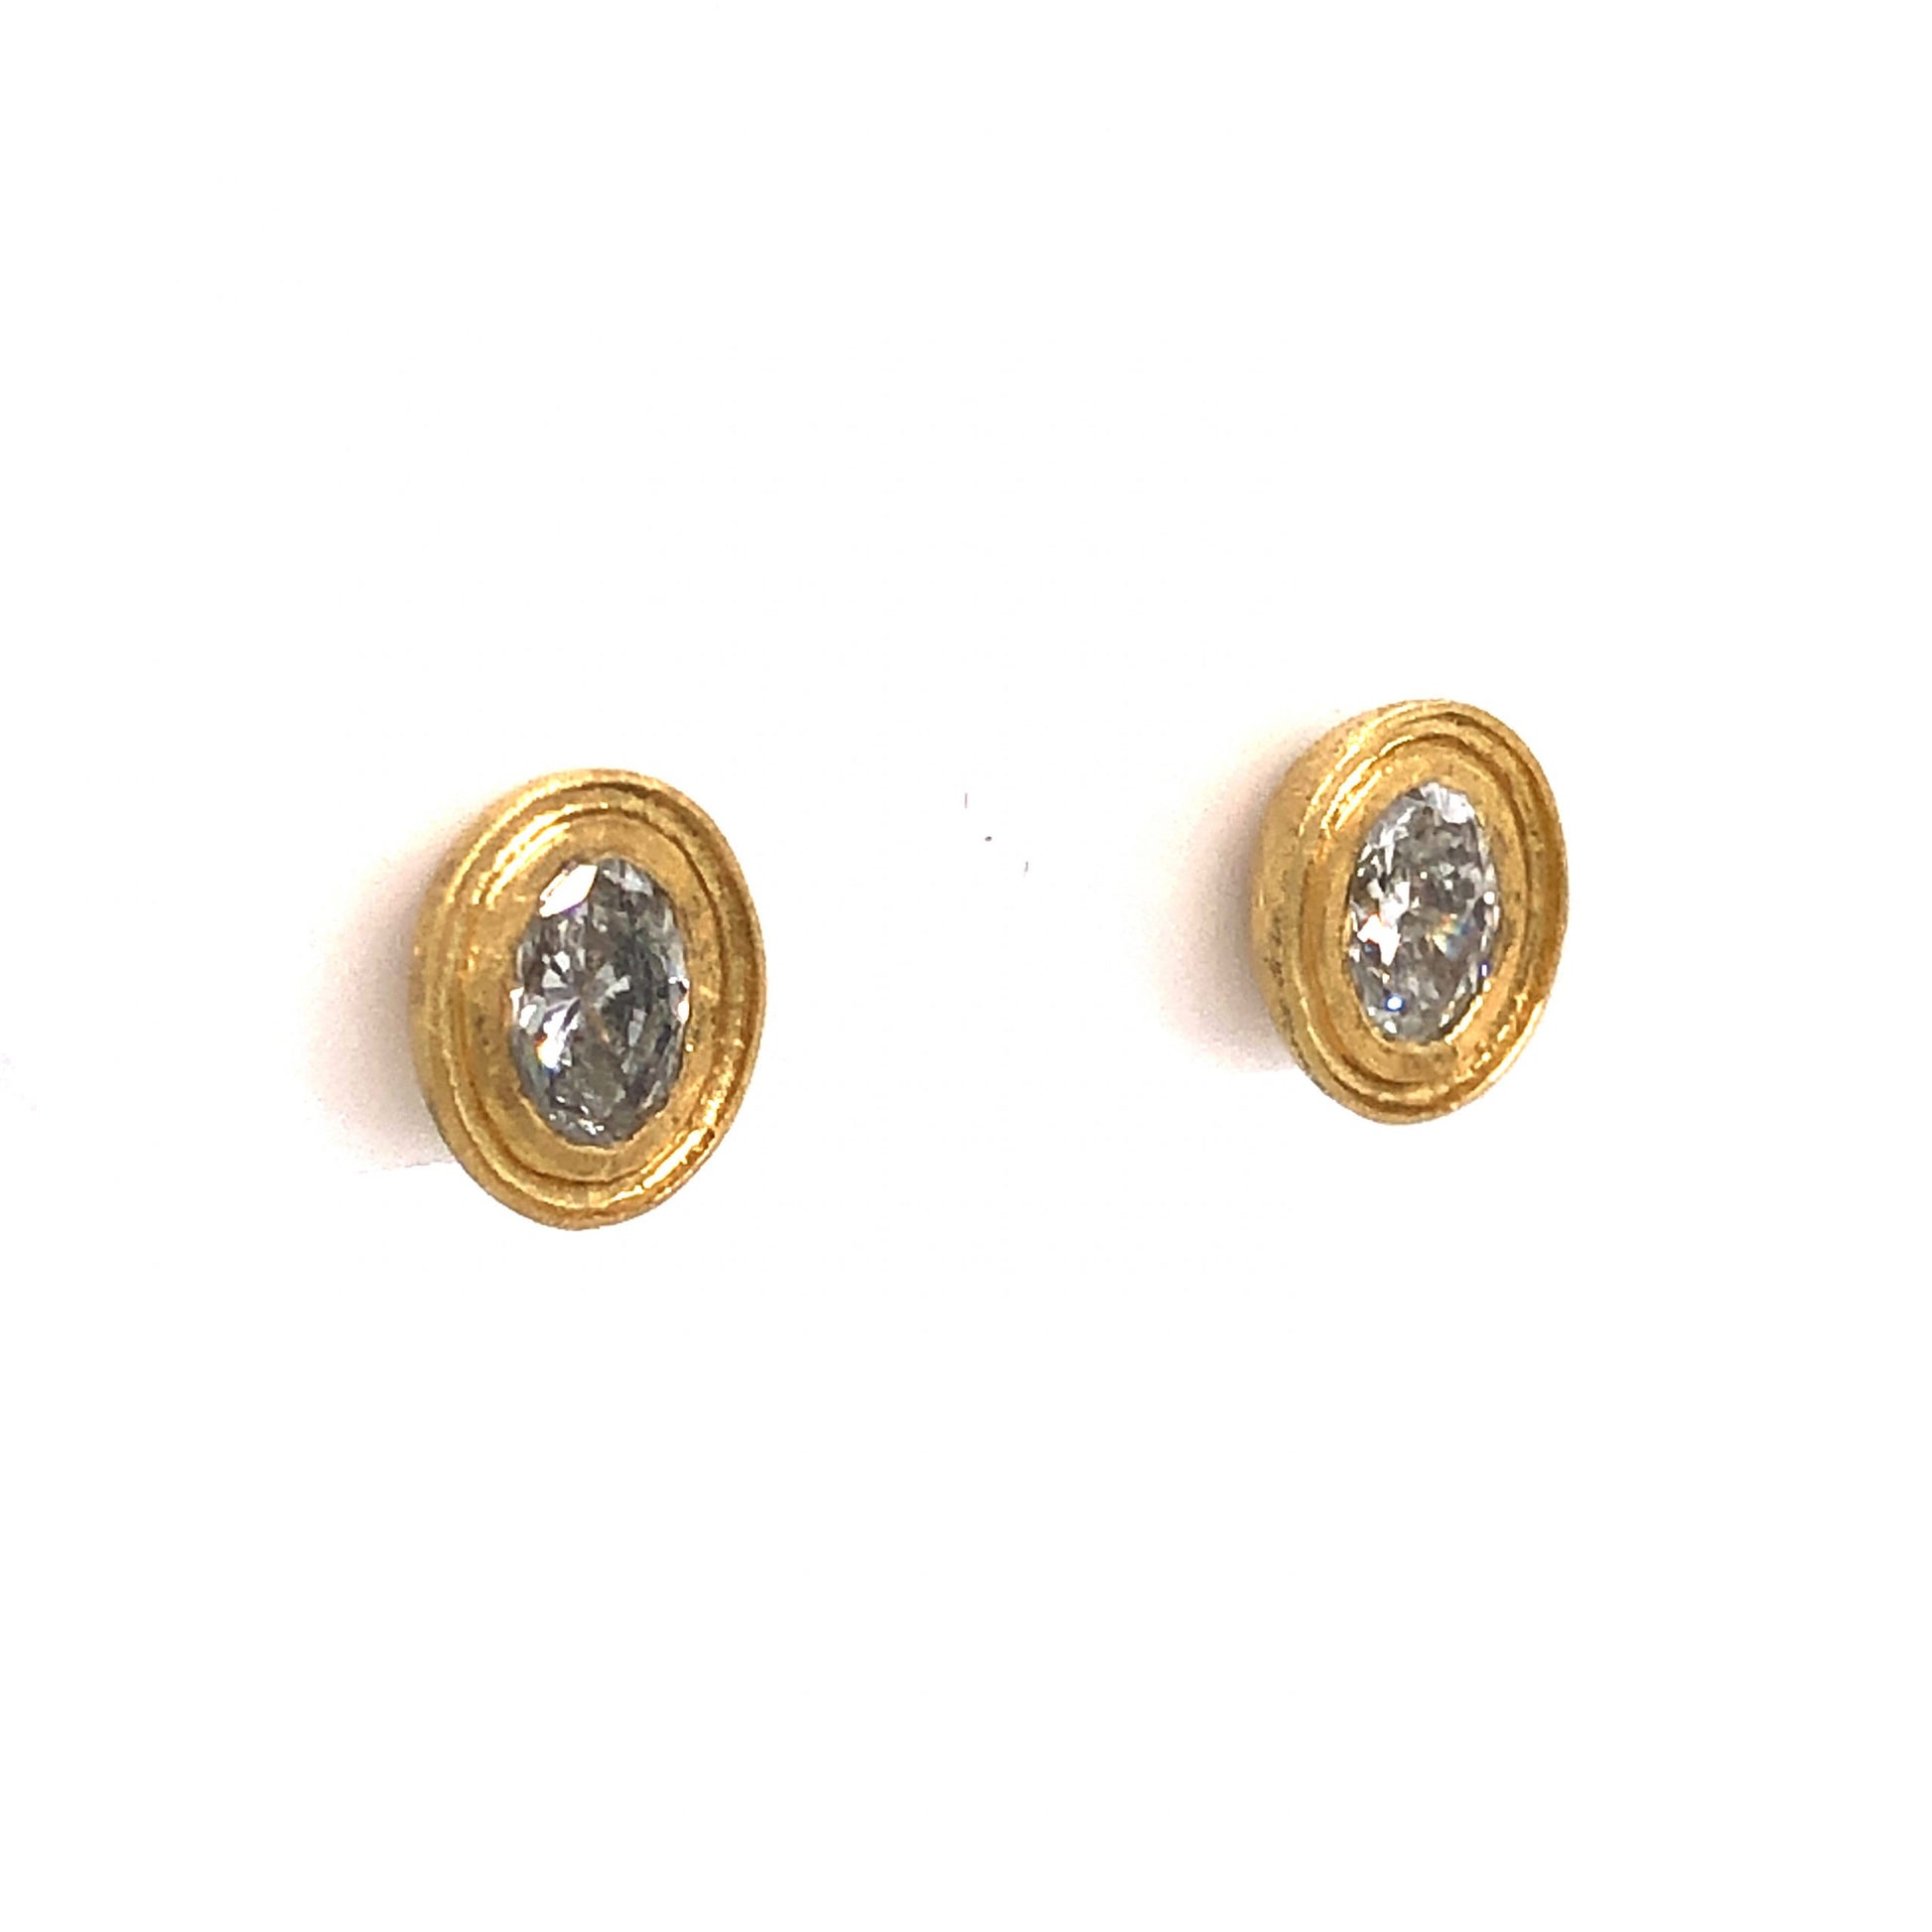 Bezel Set Oval Cut Diamond Stud Earrings in 18k Yellow GoldComposition: 18 Karat Yellow Gold Total Diamond Weight: .61ct Total Gram Weight: 3.0 g Inscription: 750
      